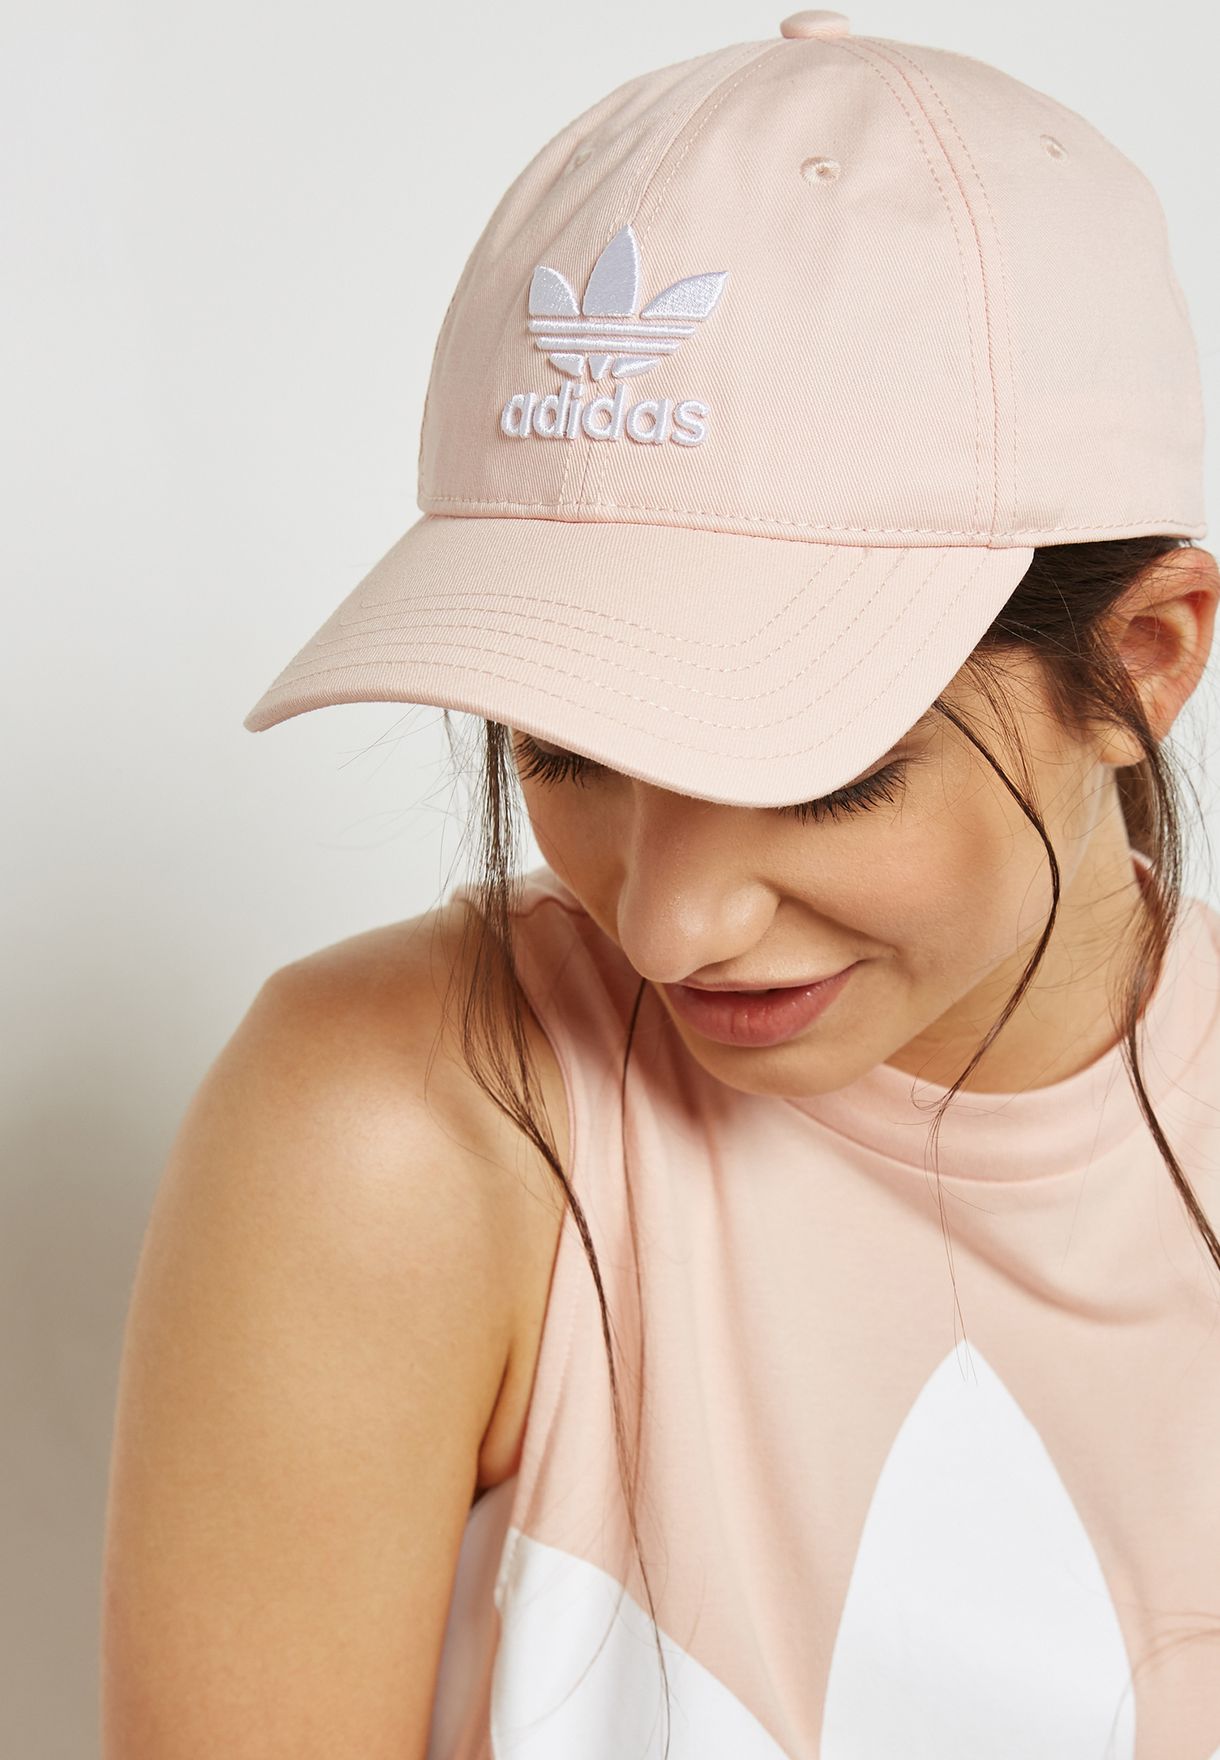 adidas trefoil cap pink